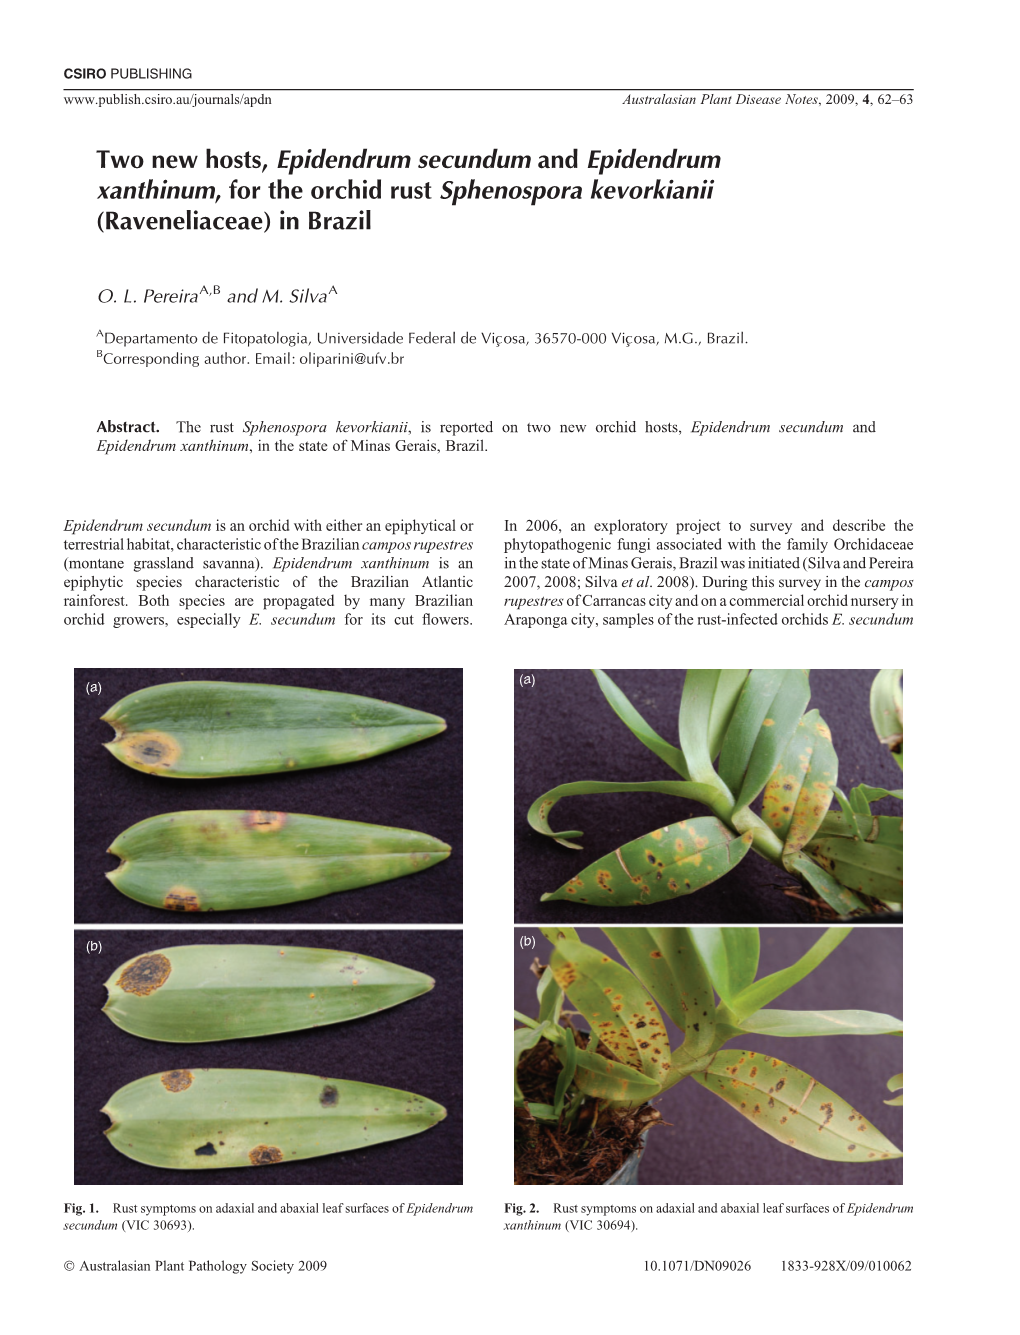 Two New Hosts, Epidendrum Secundum and Epidendrum Xanthinum, for the Orchid Rust Sphenospora Kevorkianii (Raveneliaceae) in Brazil